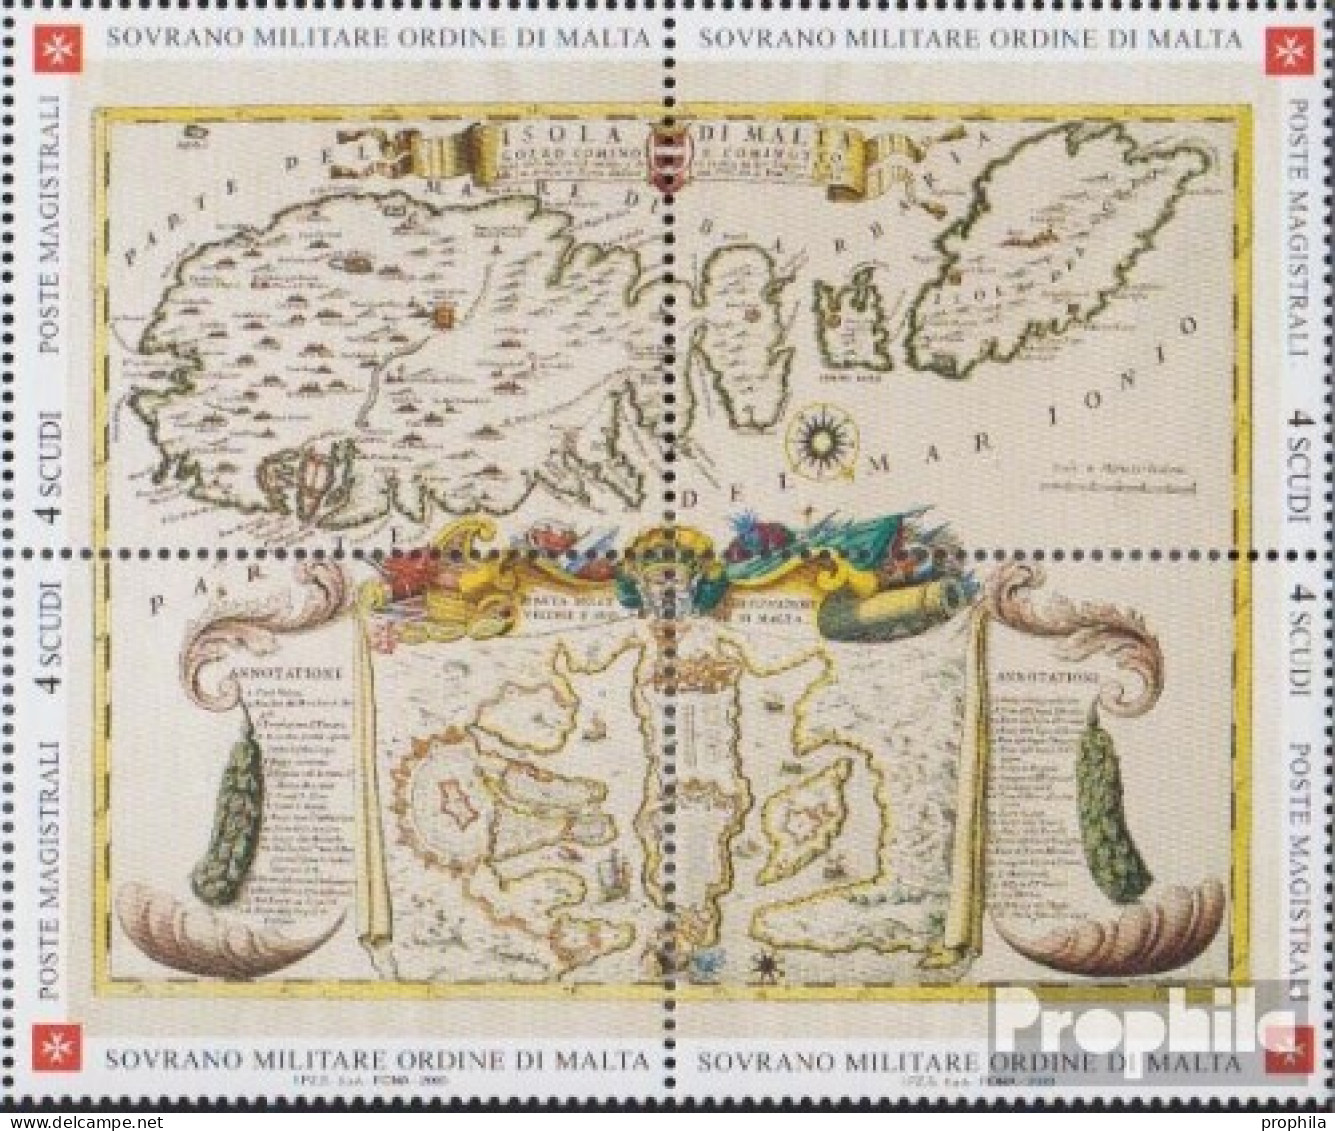 Malteserorden (SMOM) Kat-Nr.: 855-858 Viererblock (kompl.Ausg.) Postfrisch 2003 Alte Landkarte - Malta (la Orden De)